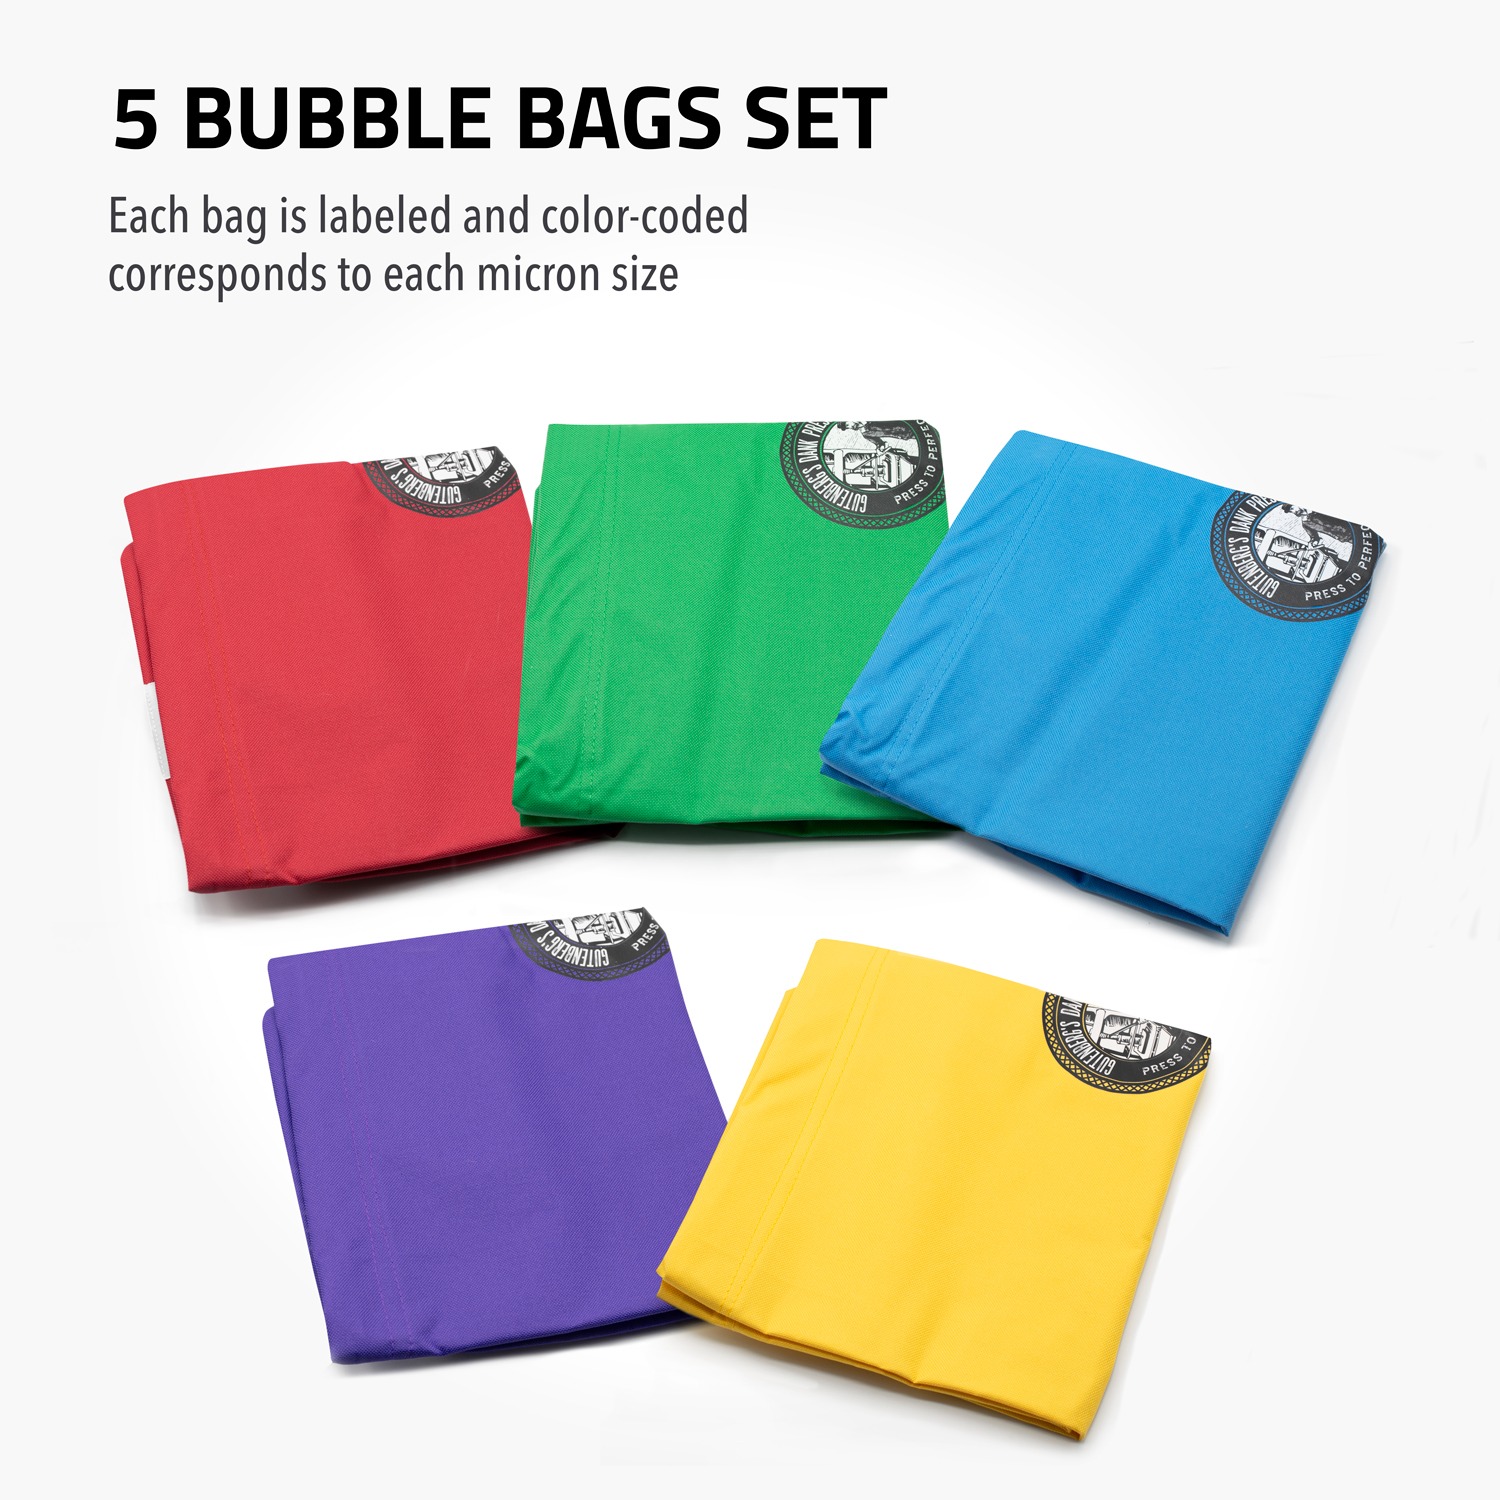 Cloth/Mesh 5 Gallon Bubble Bags 5 Bag Set